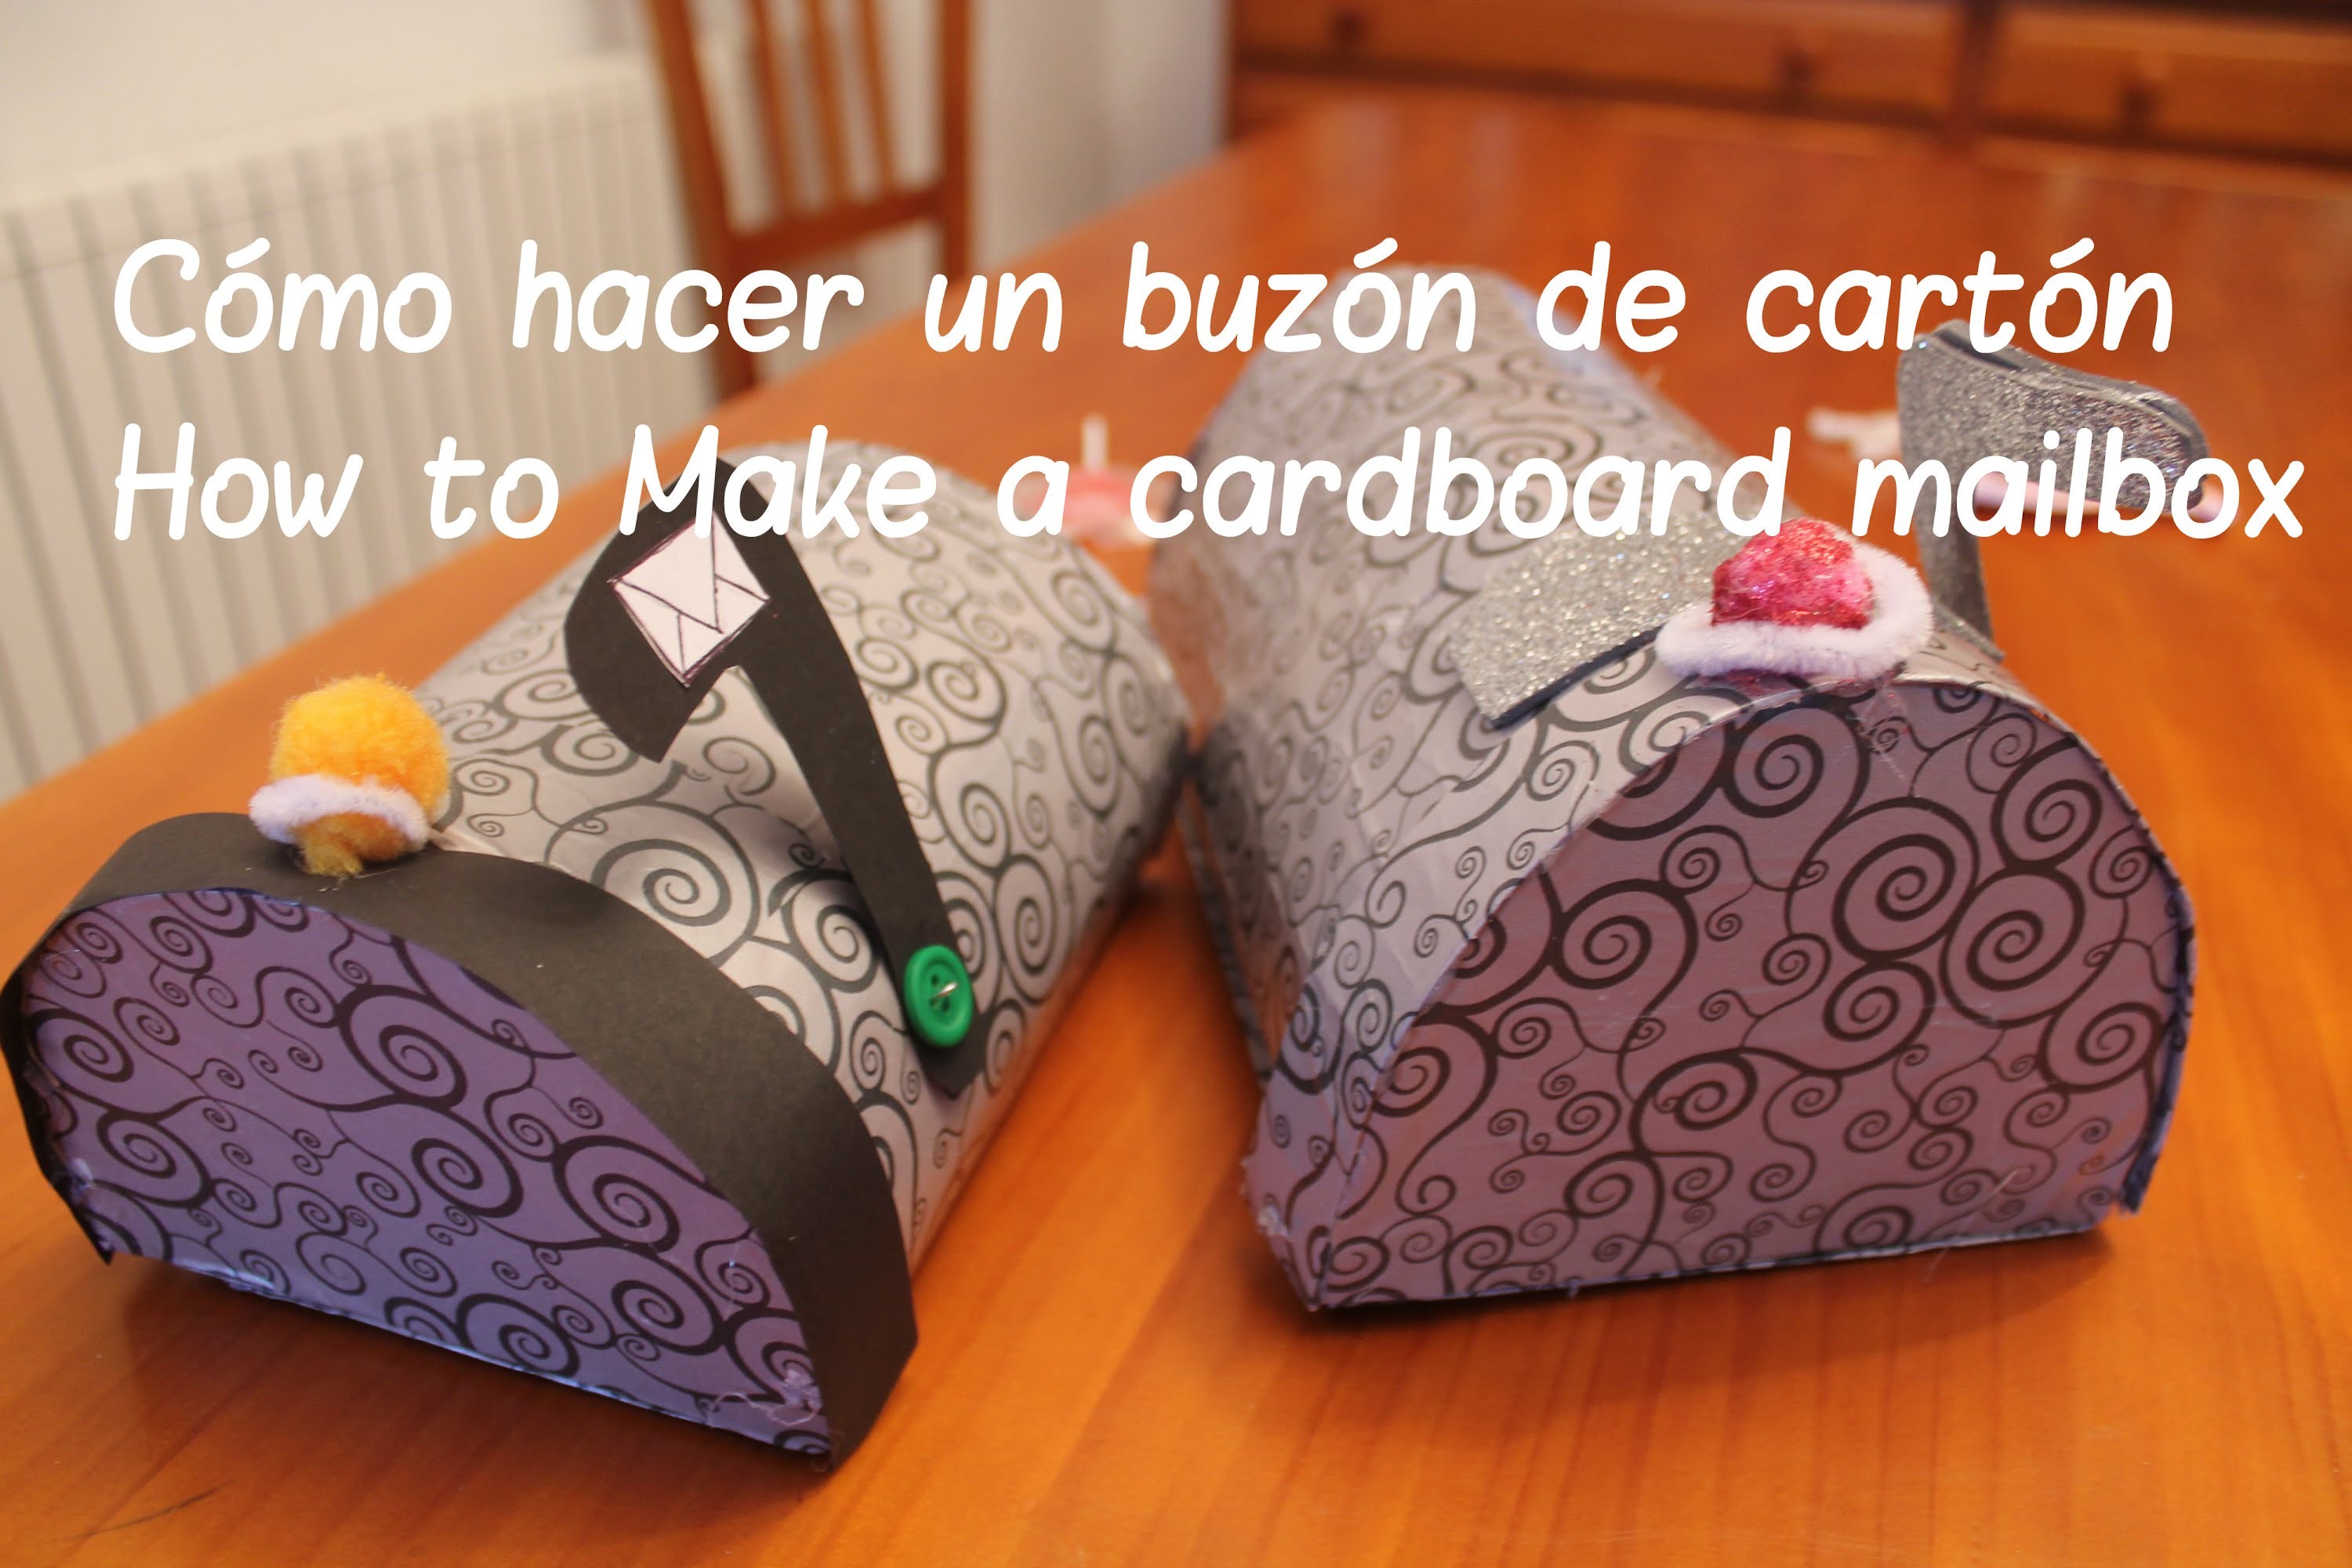 Cómo hacer un buzón de cartón - How to Make a cardboard mailbox - Ahorradoras.com